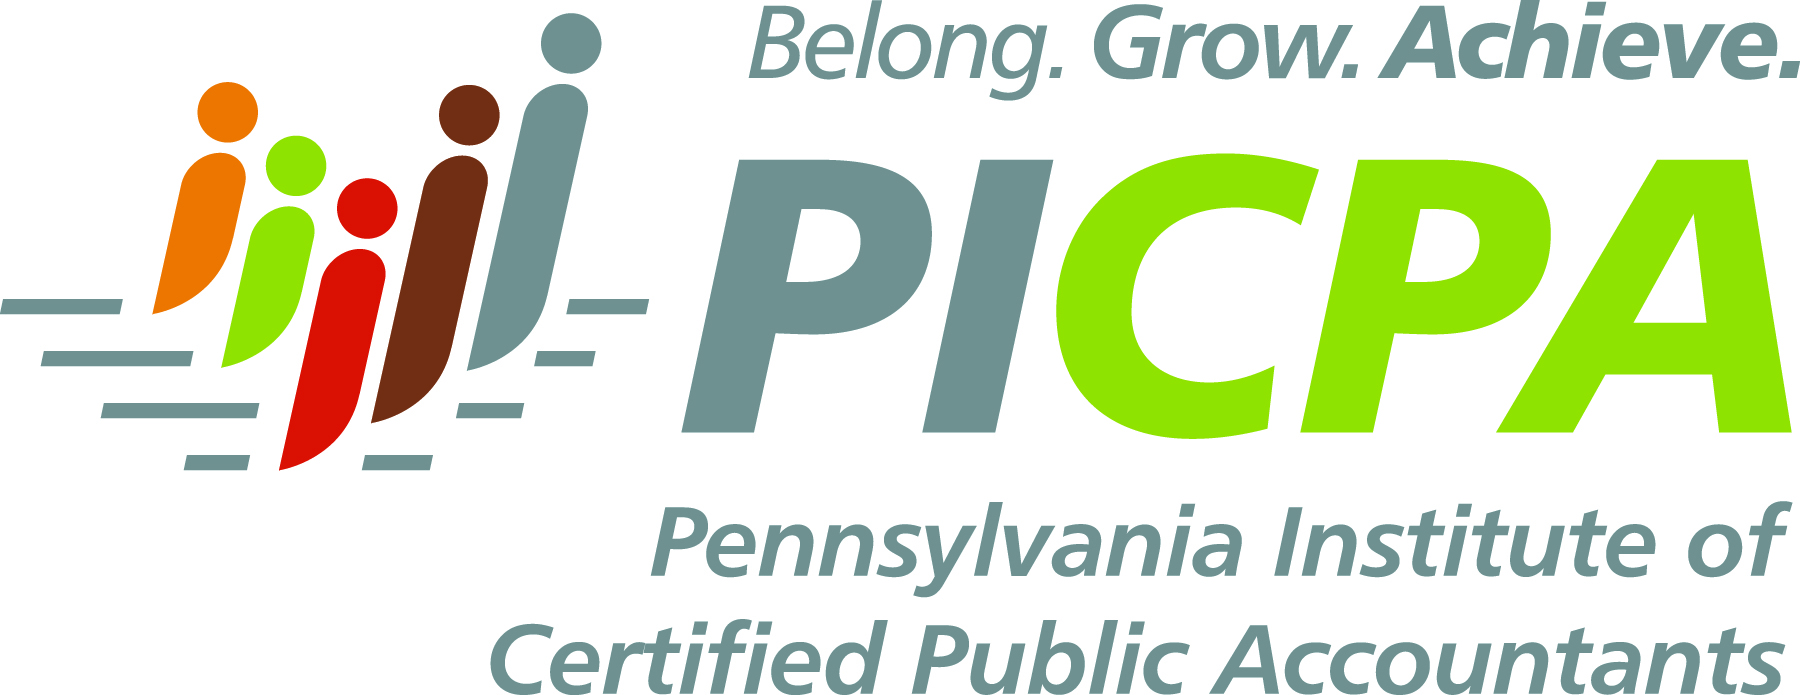 seal - Pennsylvania Institute of Certified Public Accountants